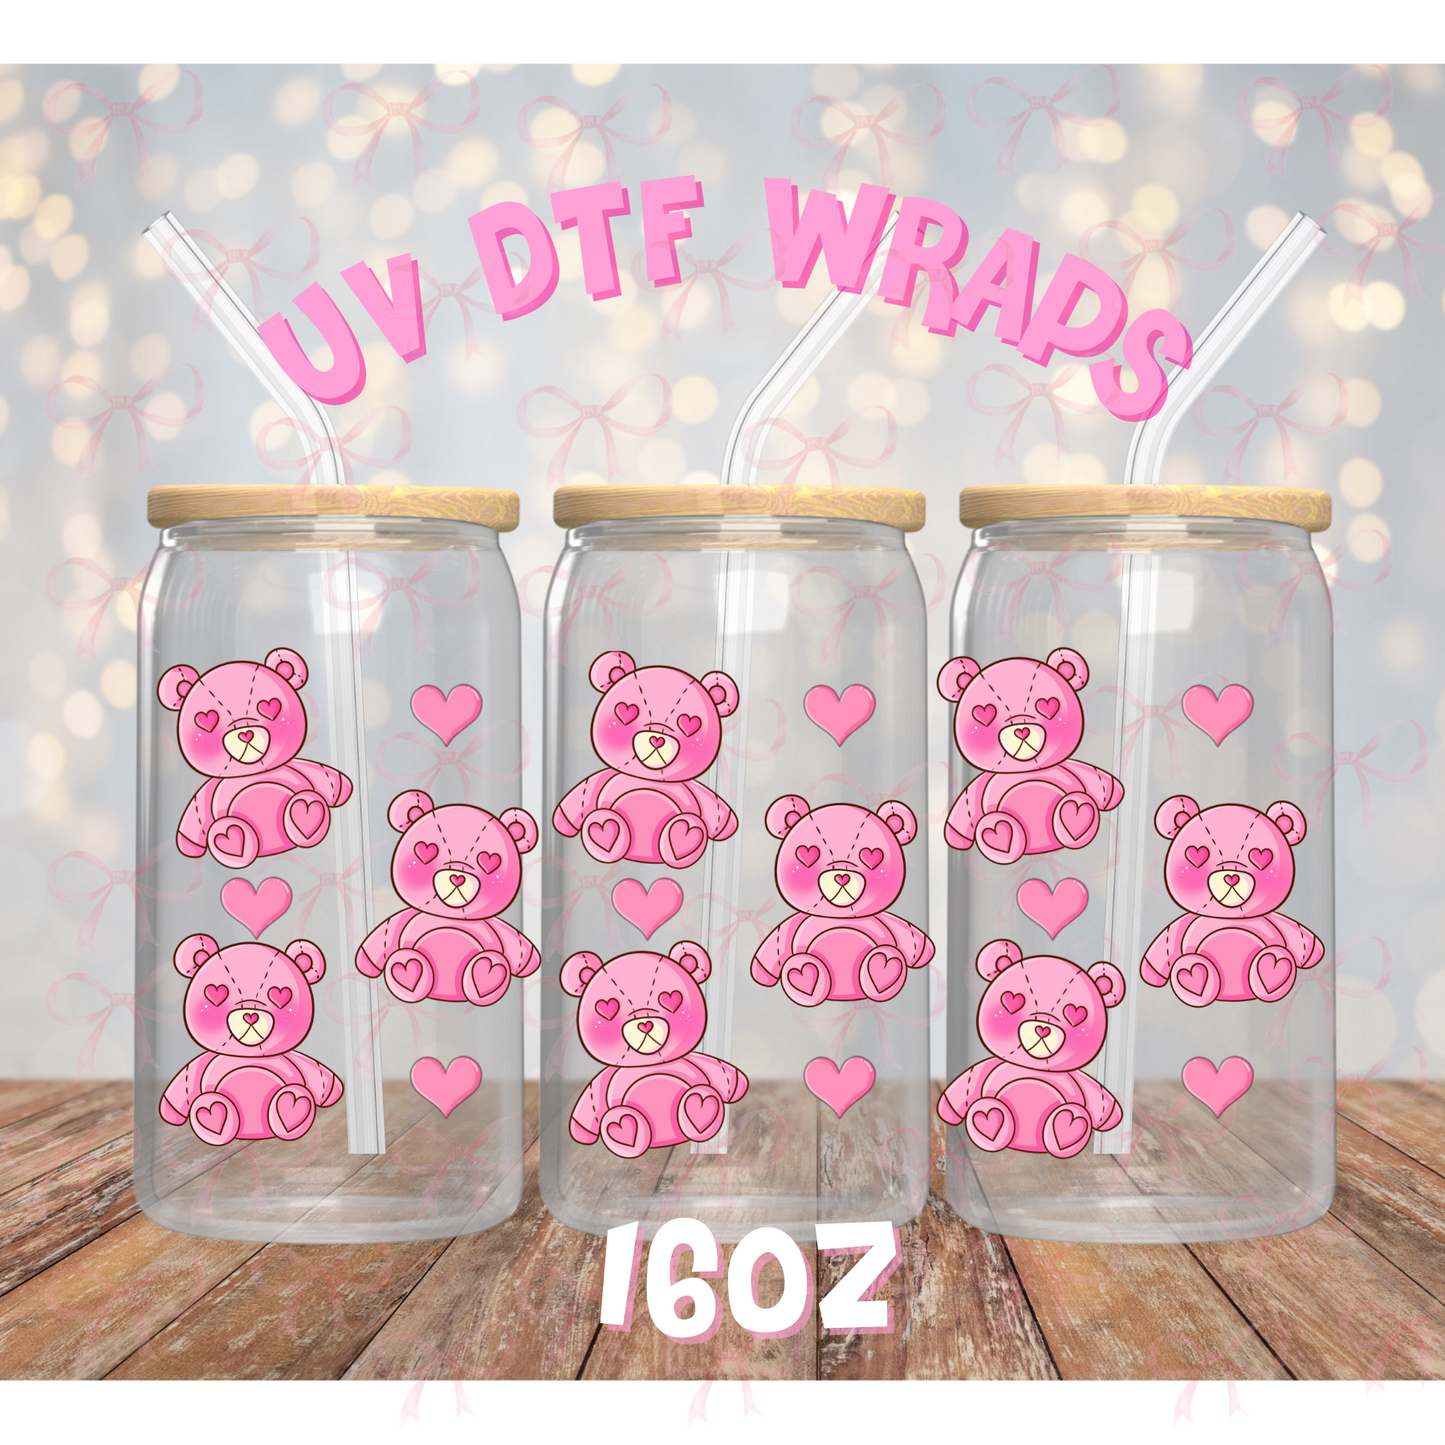 UV DTF WRAP- Cute Love Bears